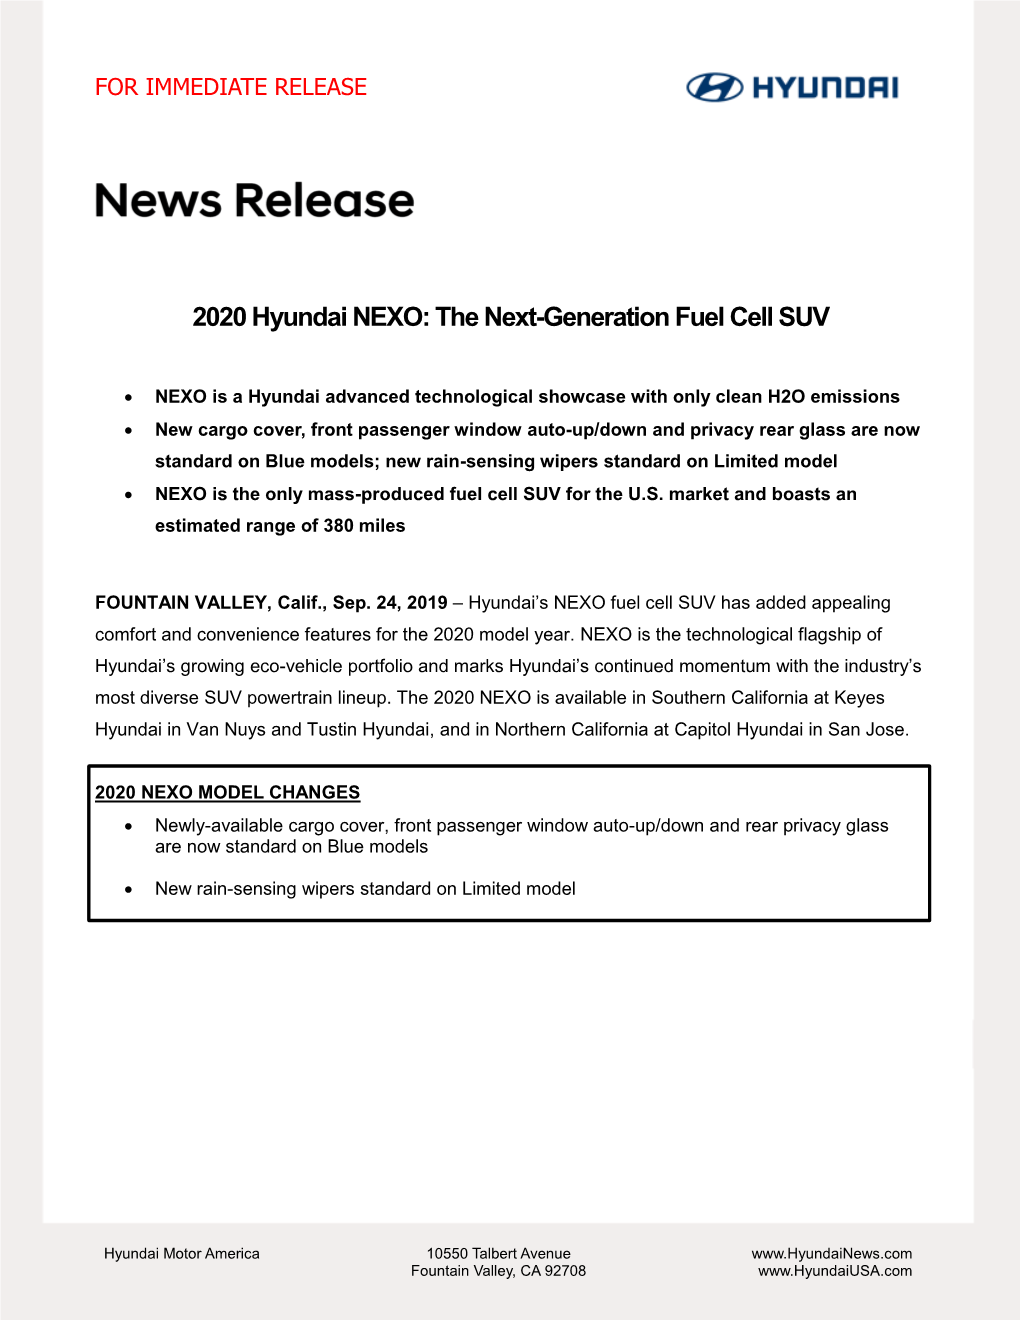 2020 Hyundai NEXO: the Next-Generation Fuel Cell SUV